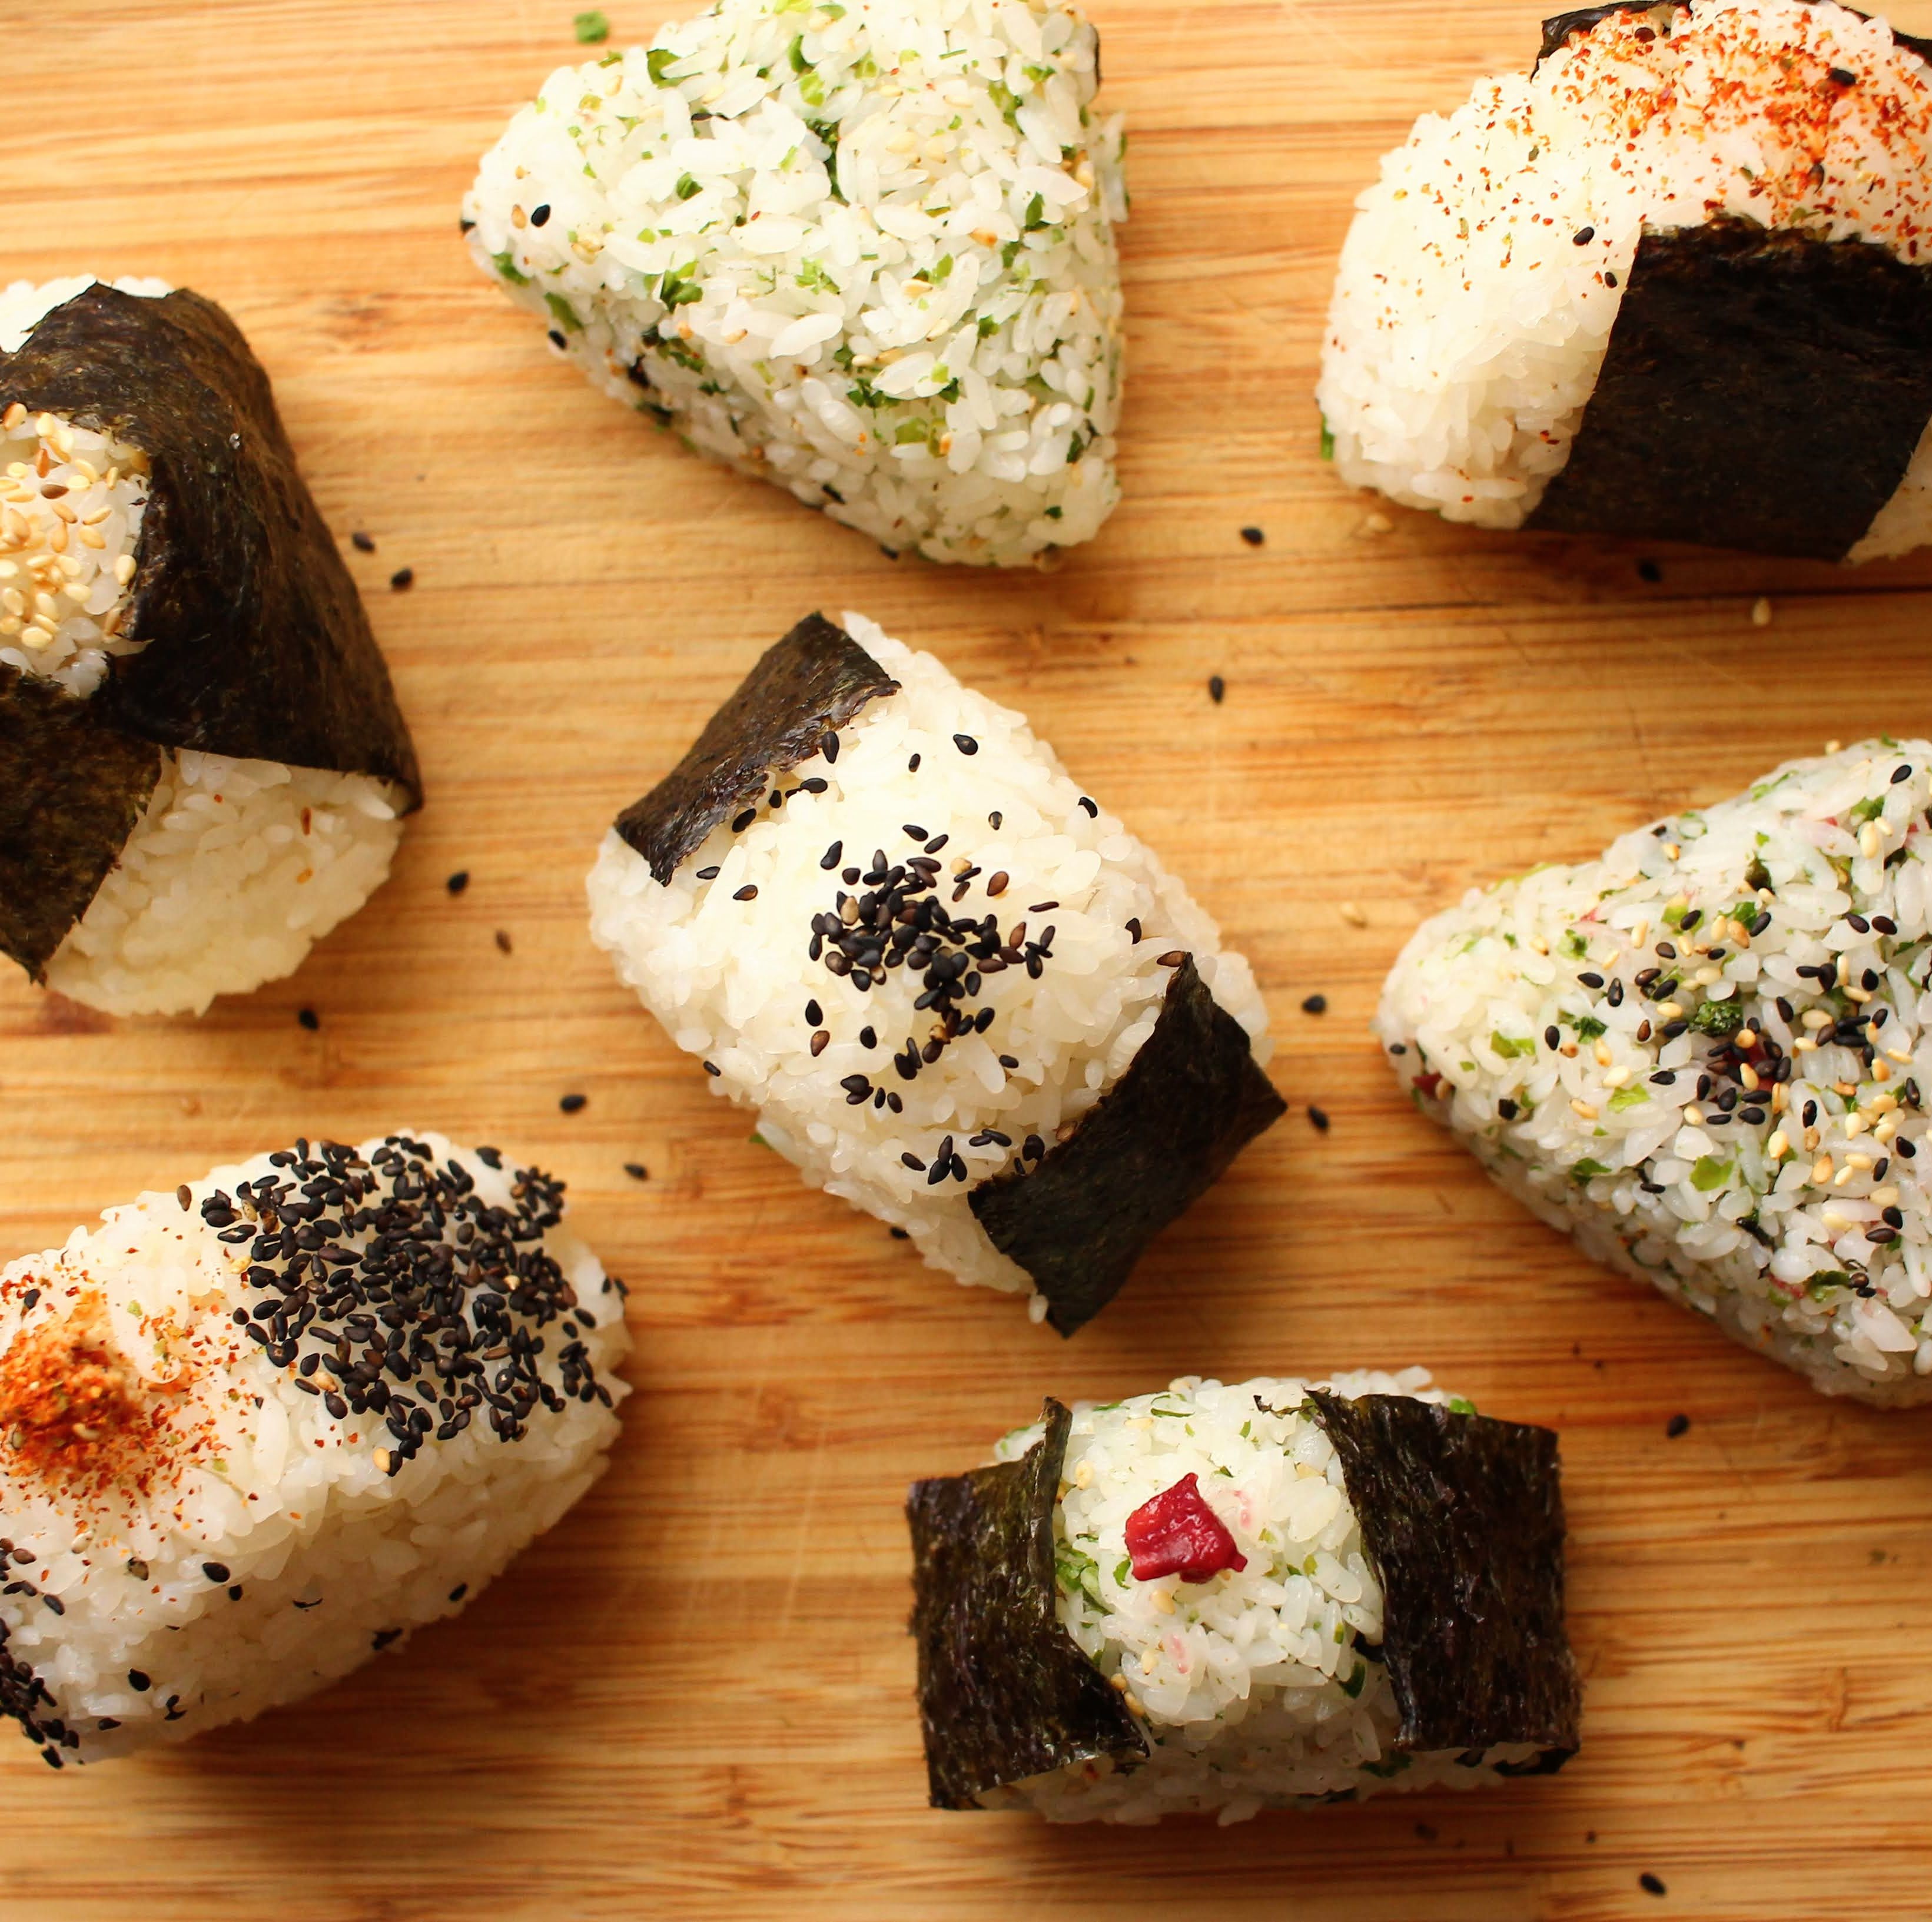 Rice And Shine! Homemade Onigiri Is A Rice Lover's Dream